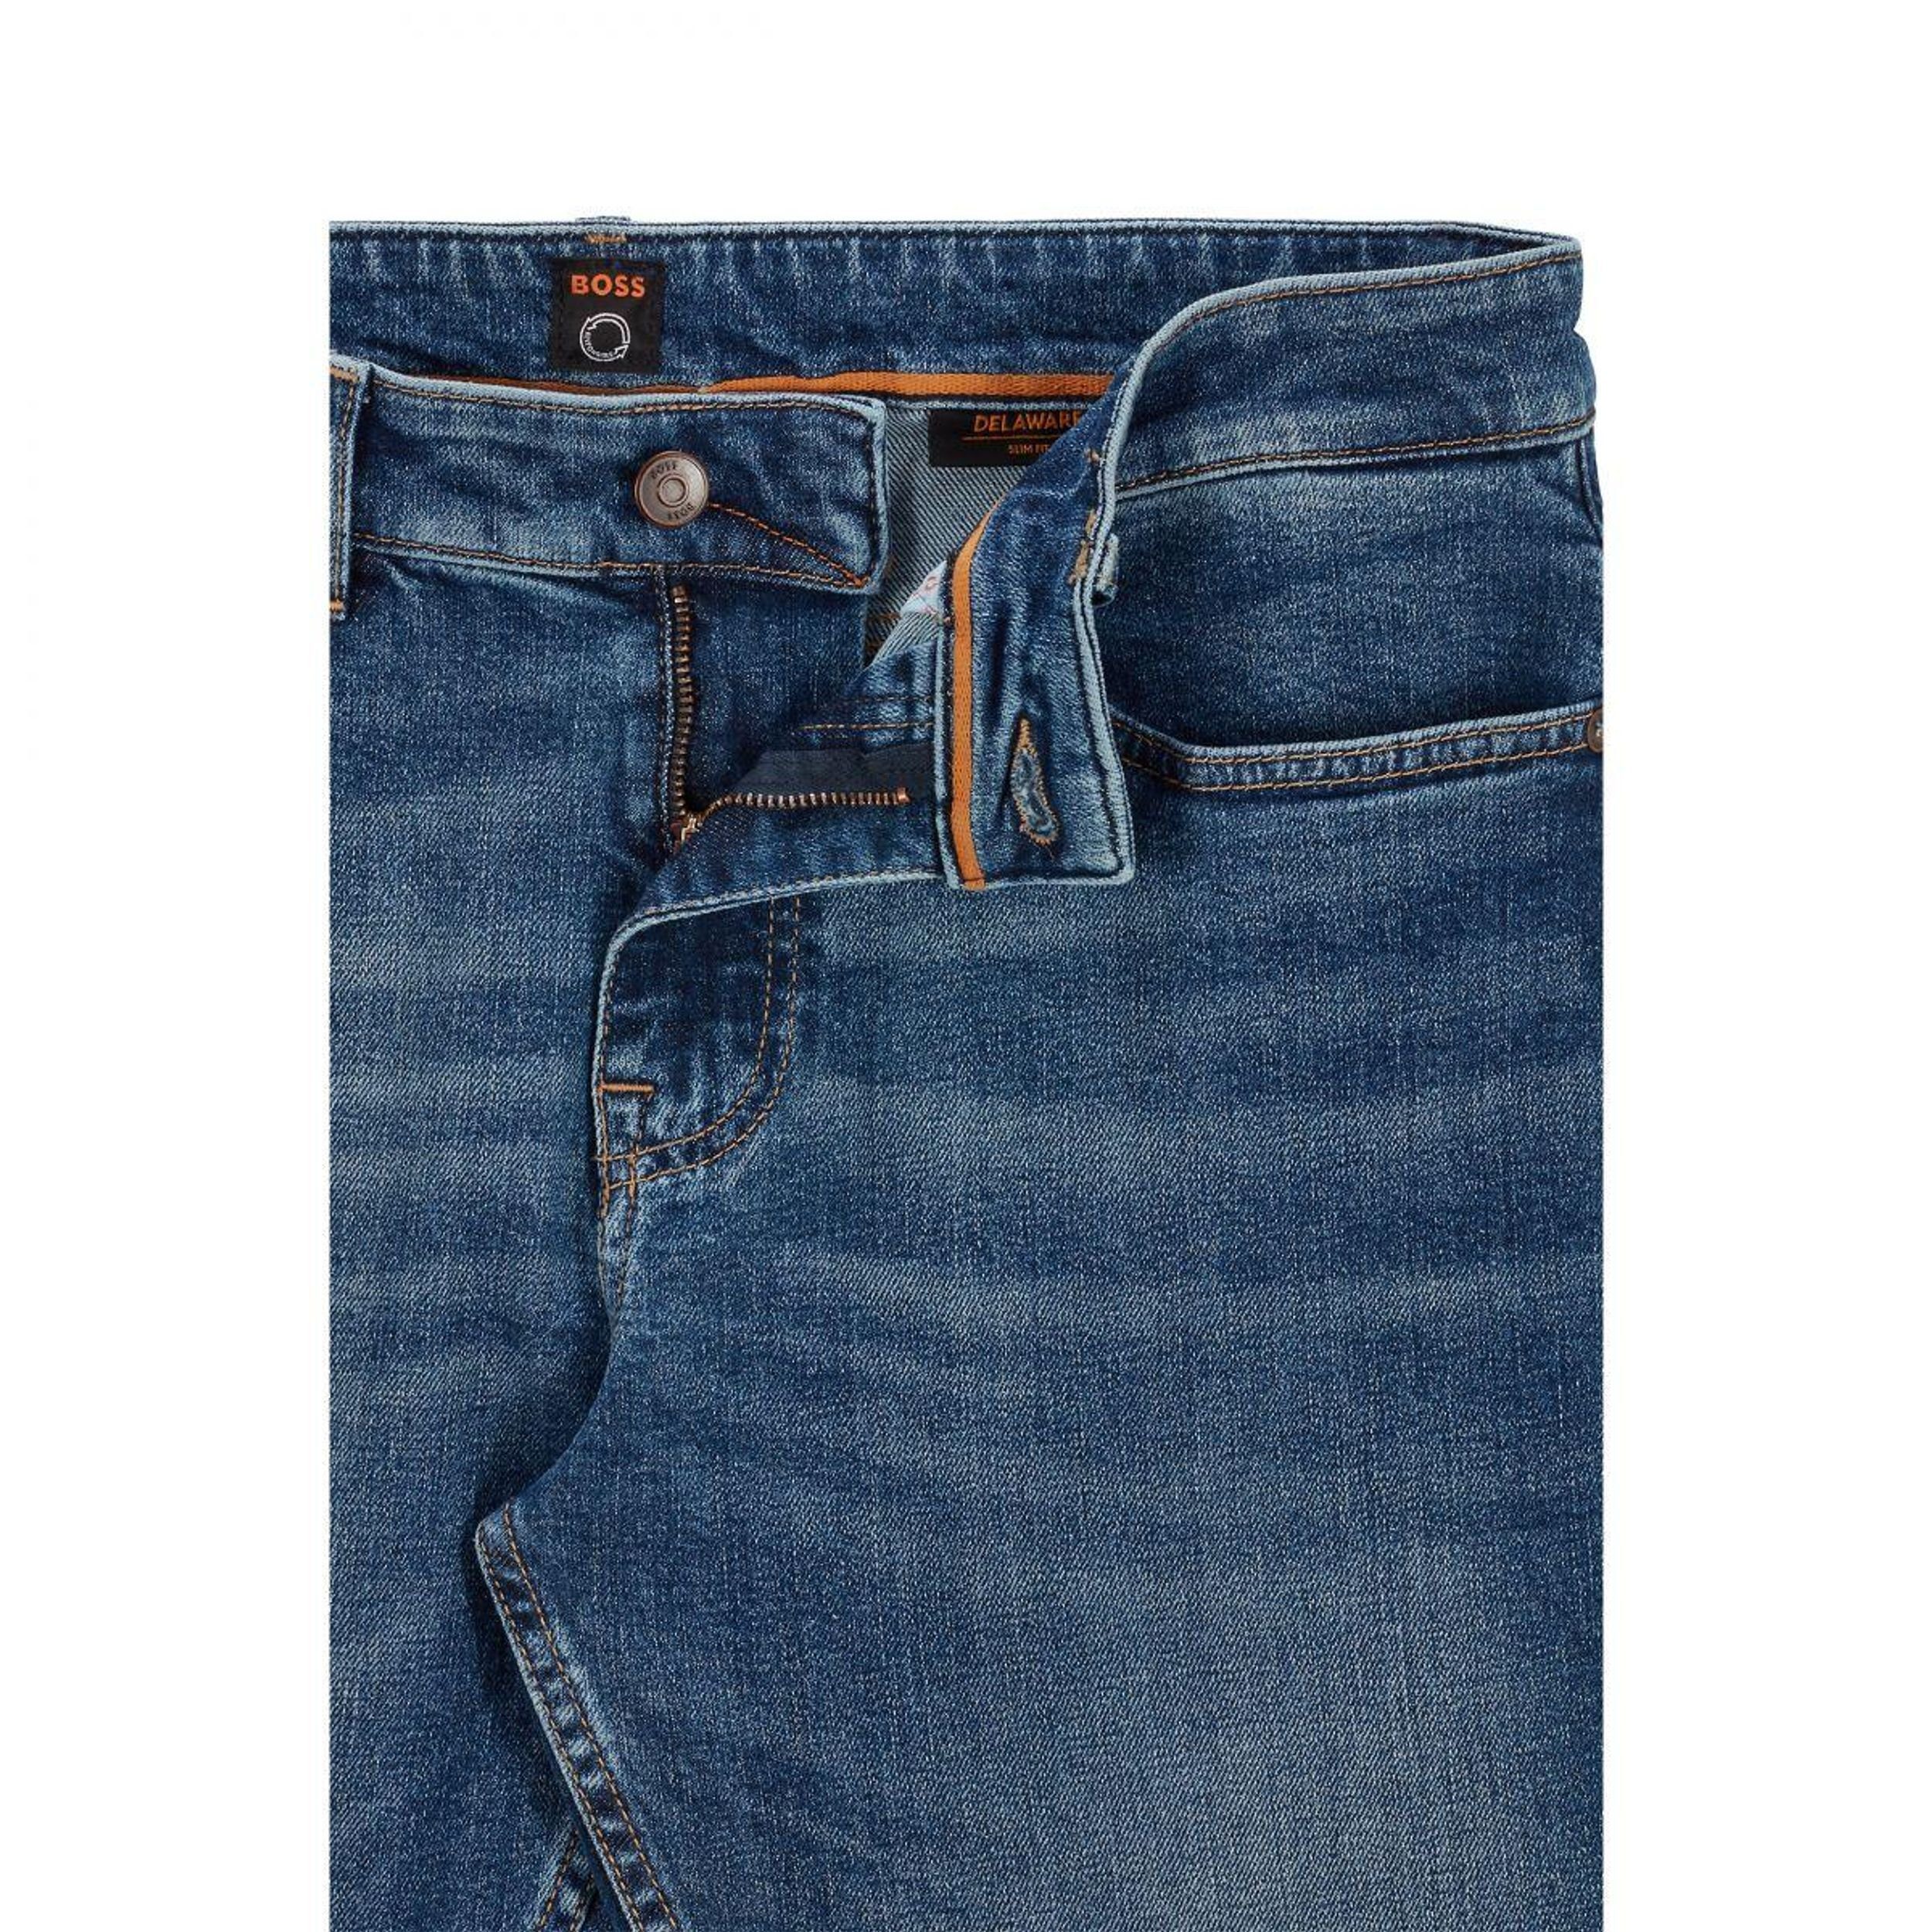 BOSS ORANGE Straight-Jeans Boss medium blue "Delaware" Orange Jeans blau